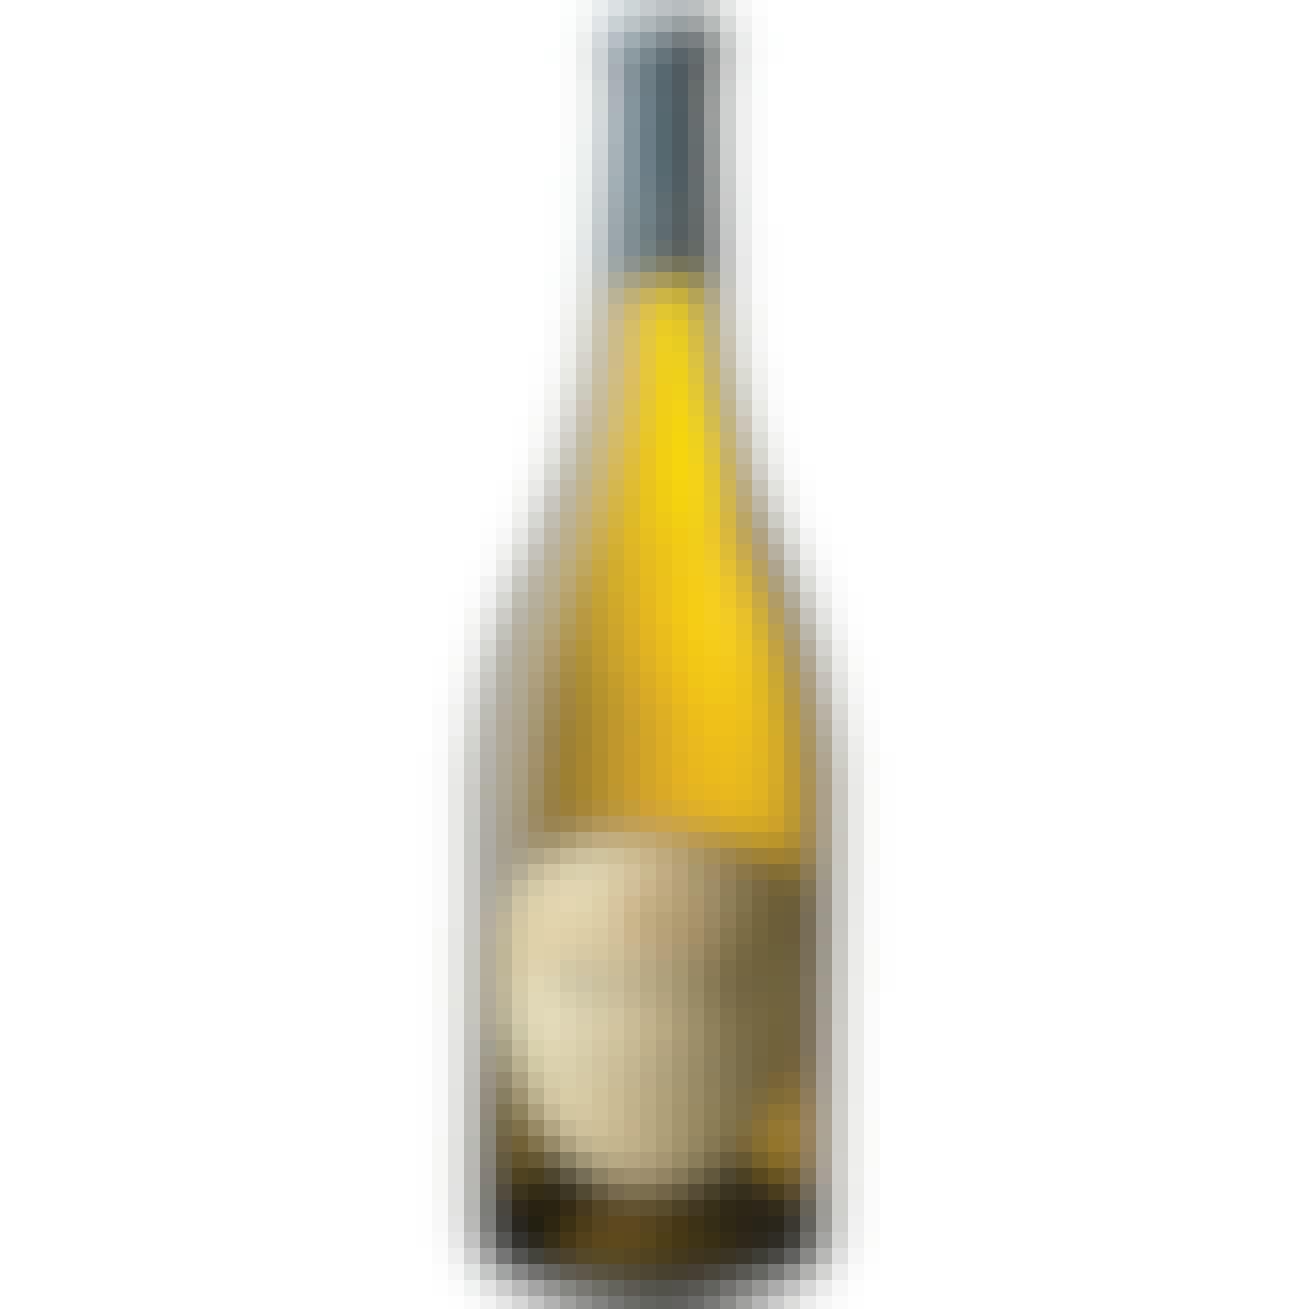 Bogle Chardonnay 2019 750ml